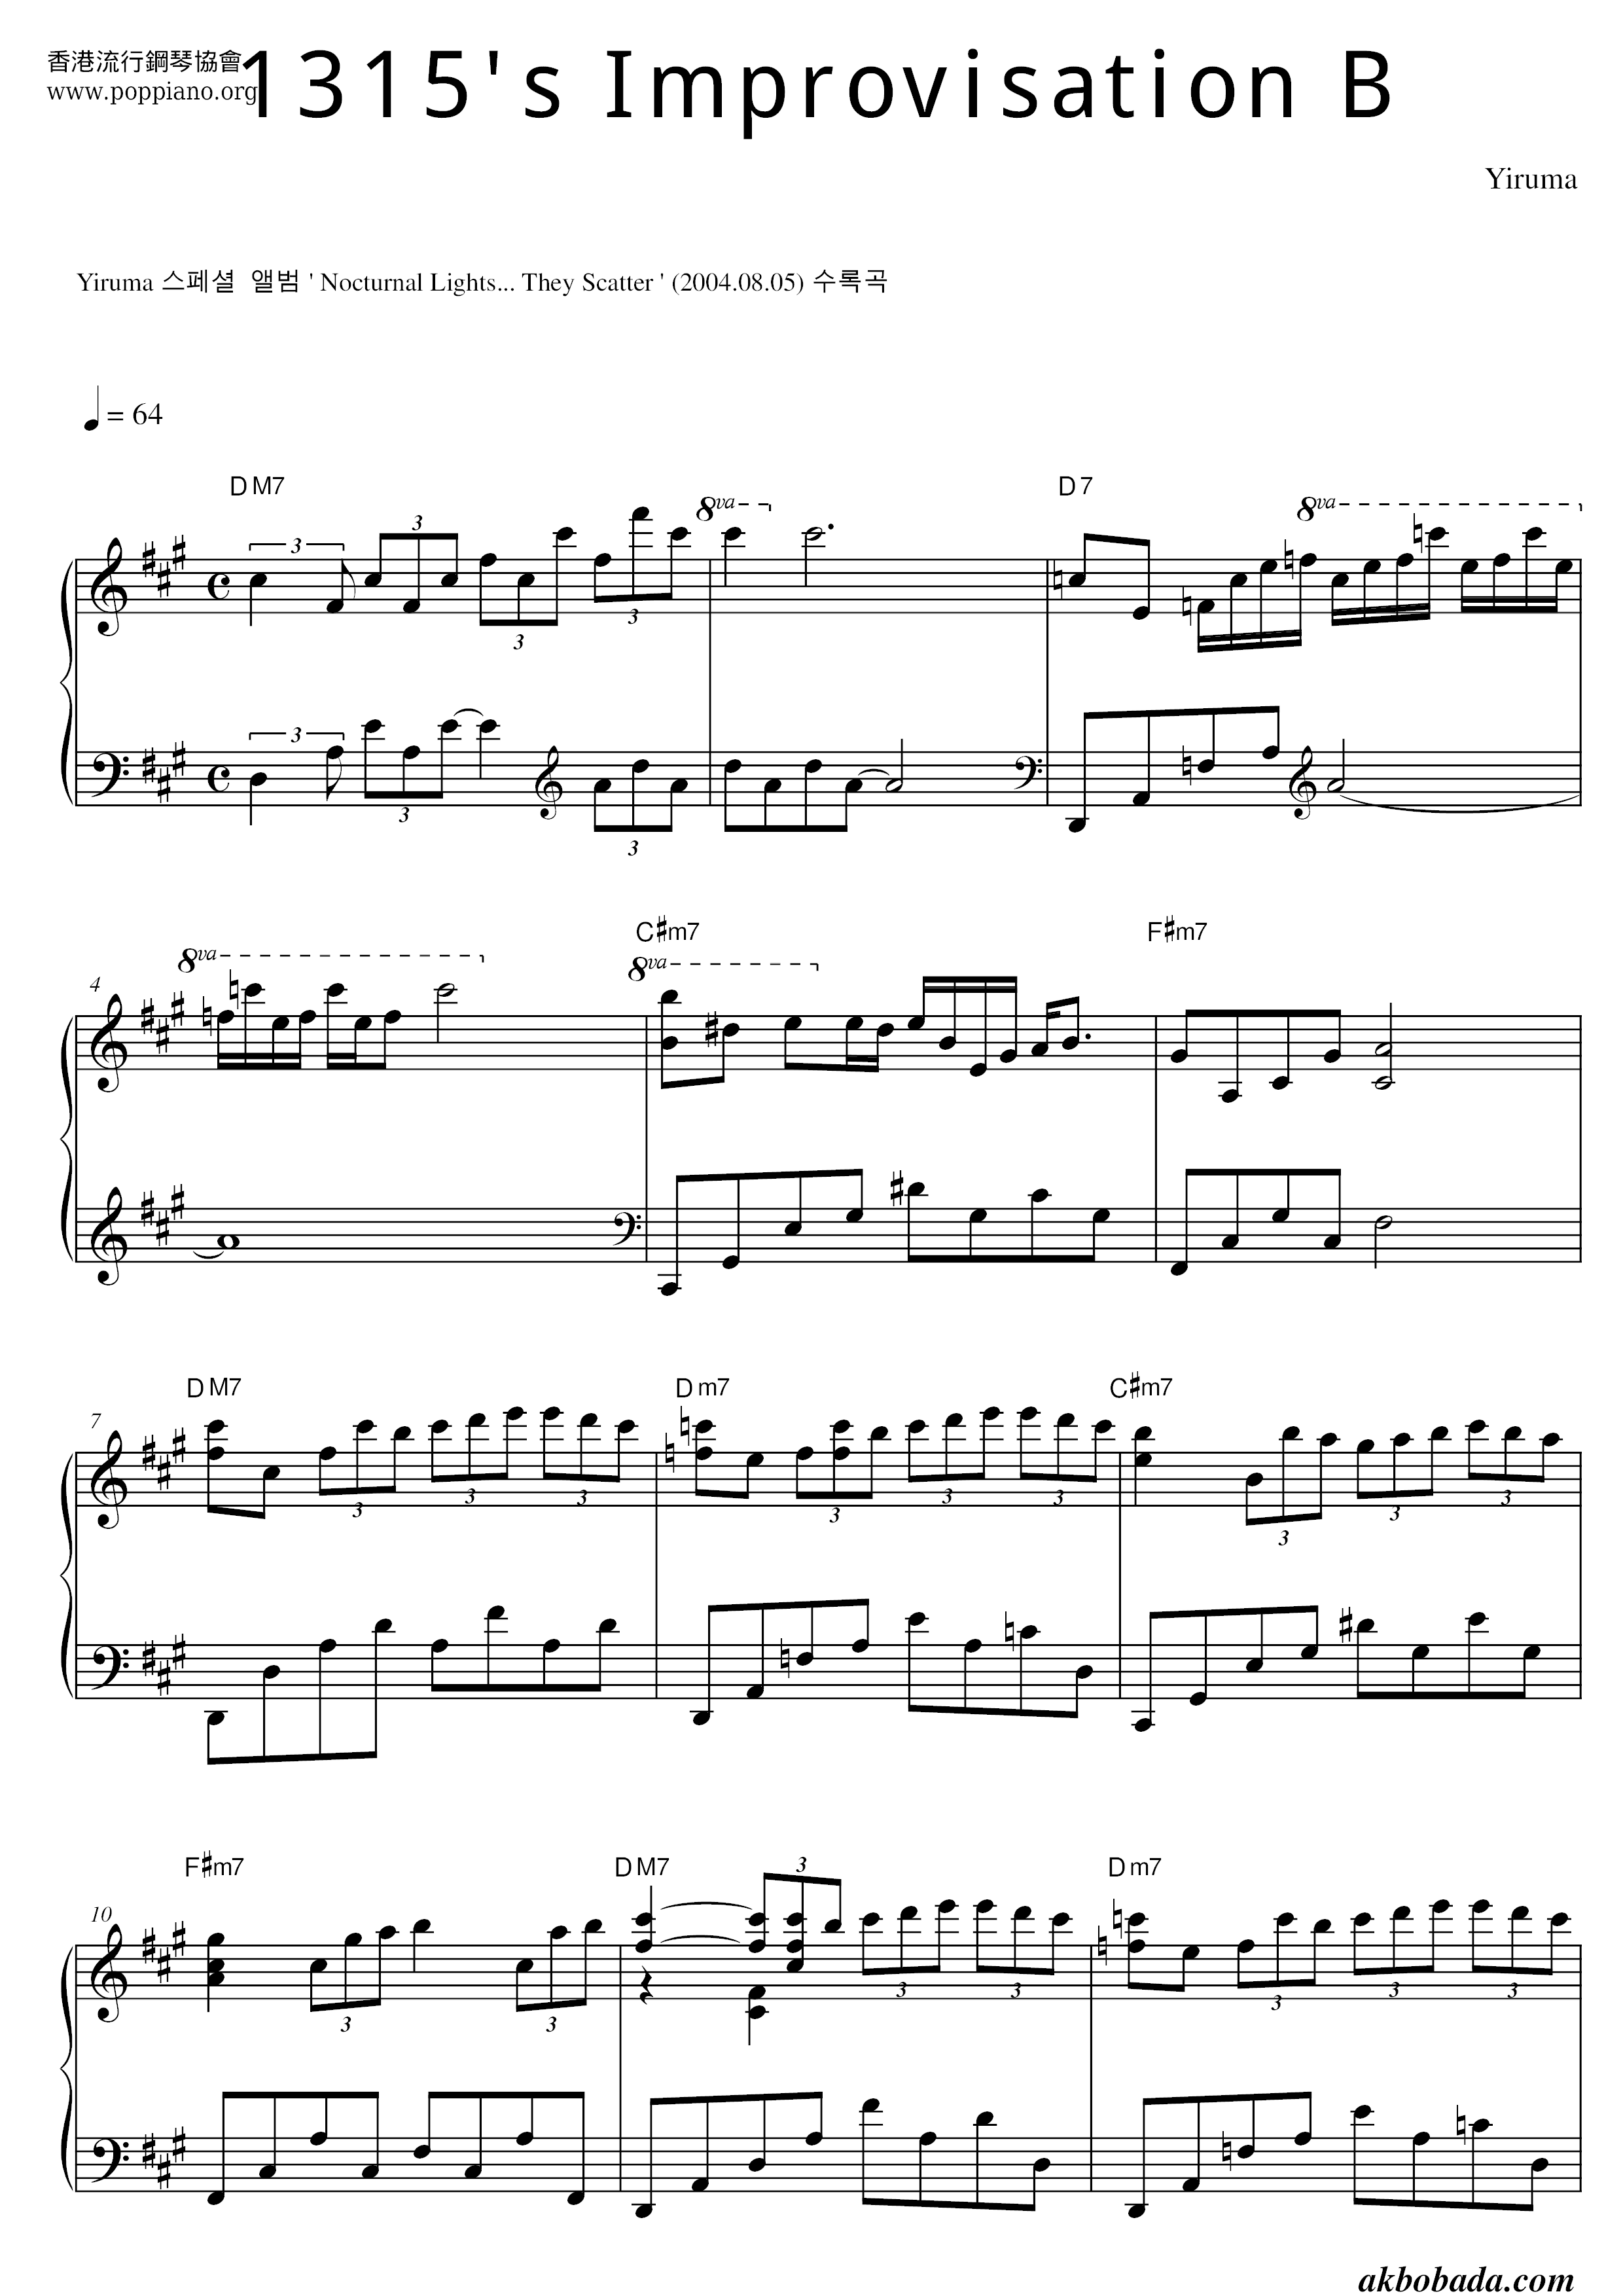 1315's Improvisation B琴譜